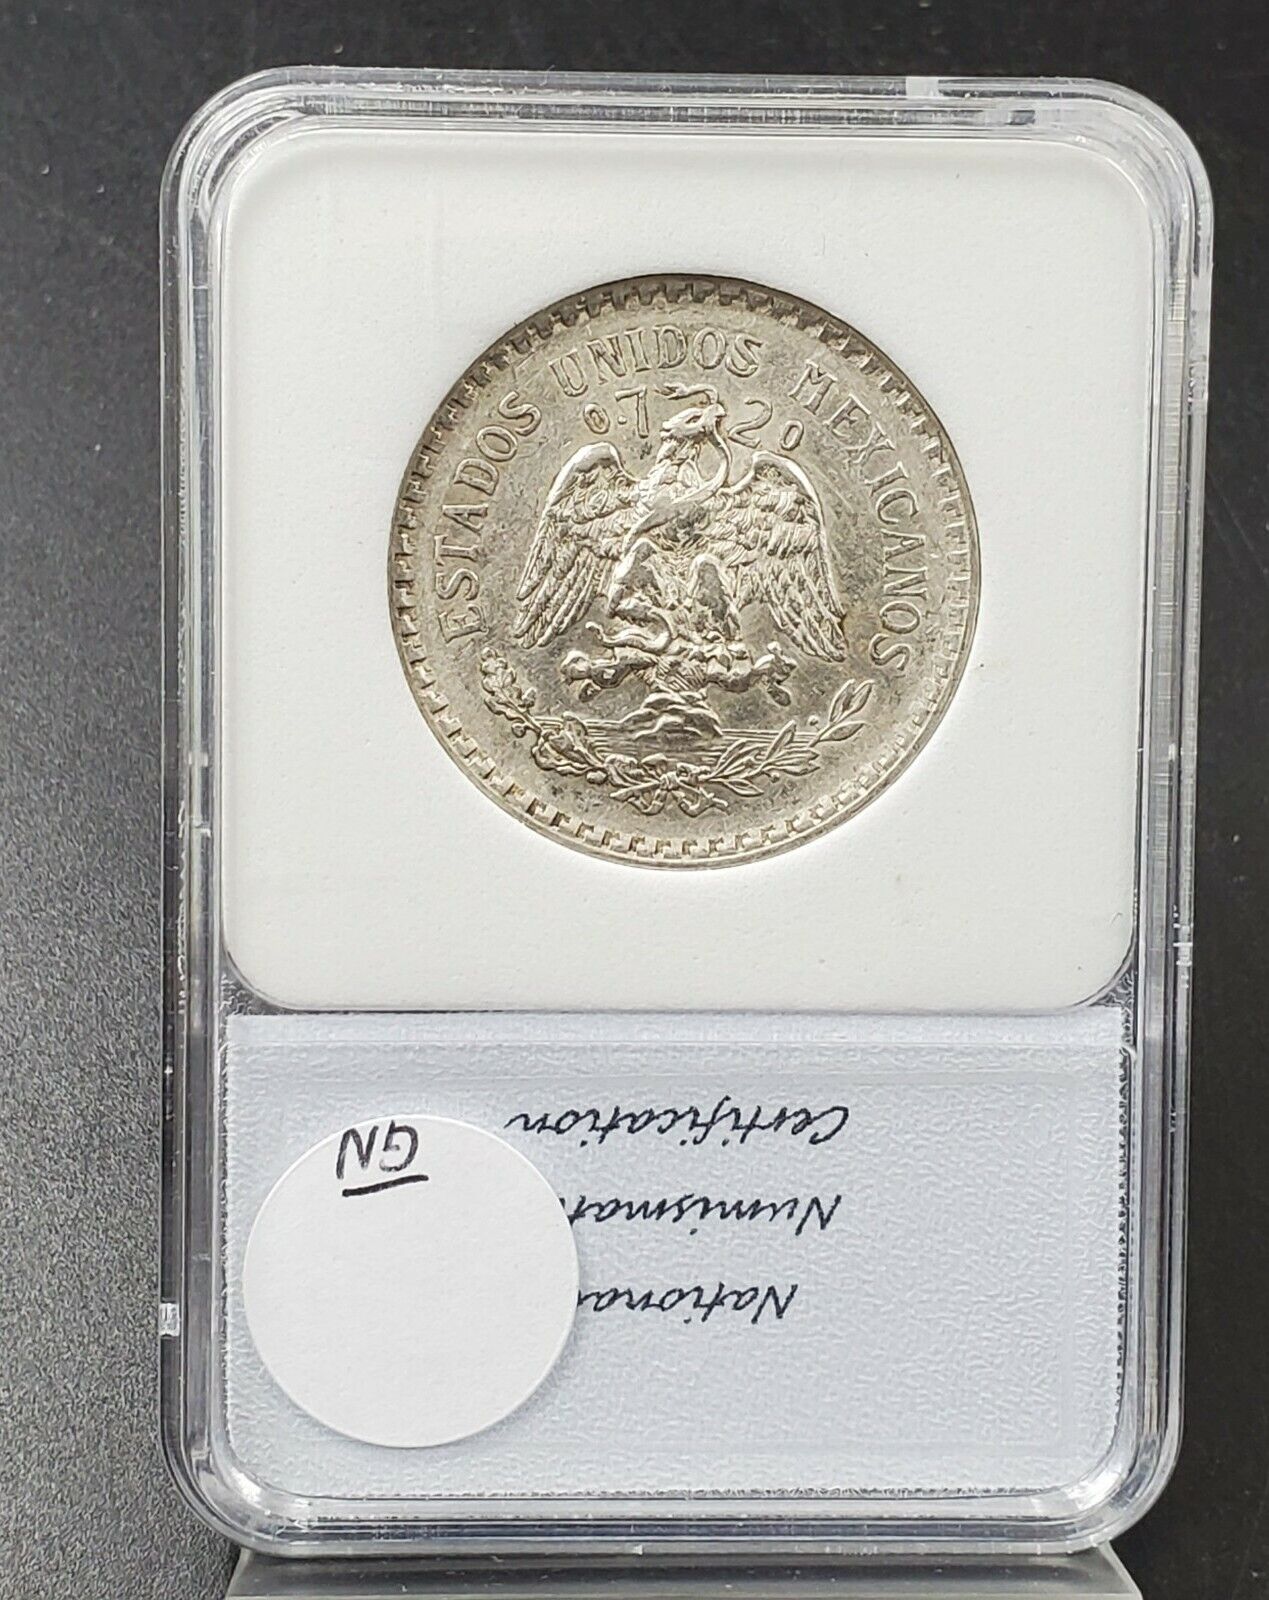 1925 Un Peso Silver Coin Choice AU Mexico National Numismatic Certification 2